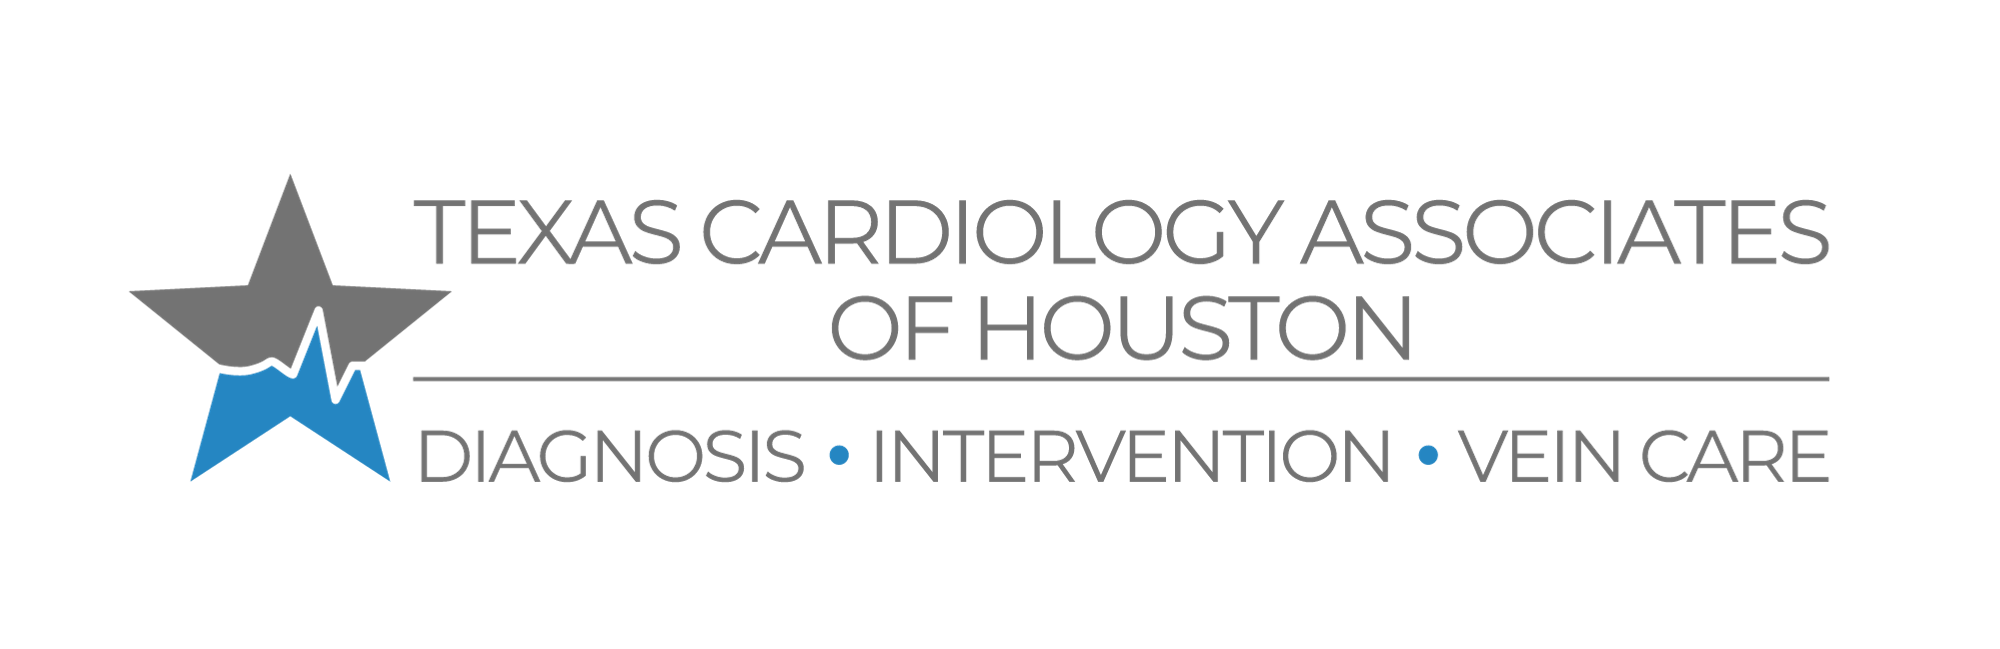 Texas Cardiology Associates of Houston logo